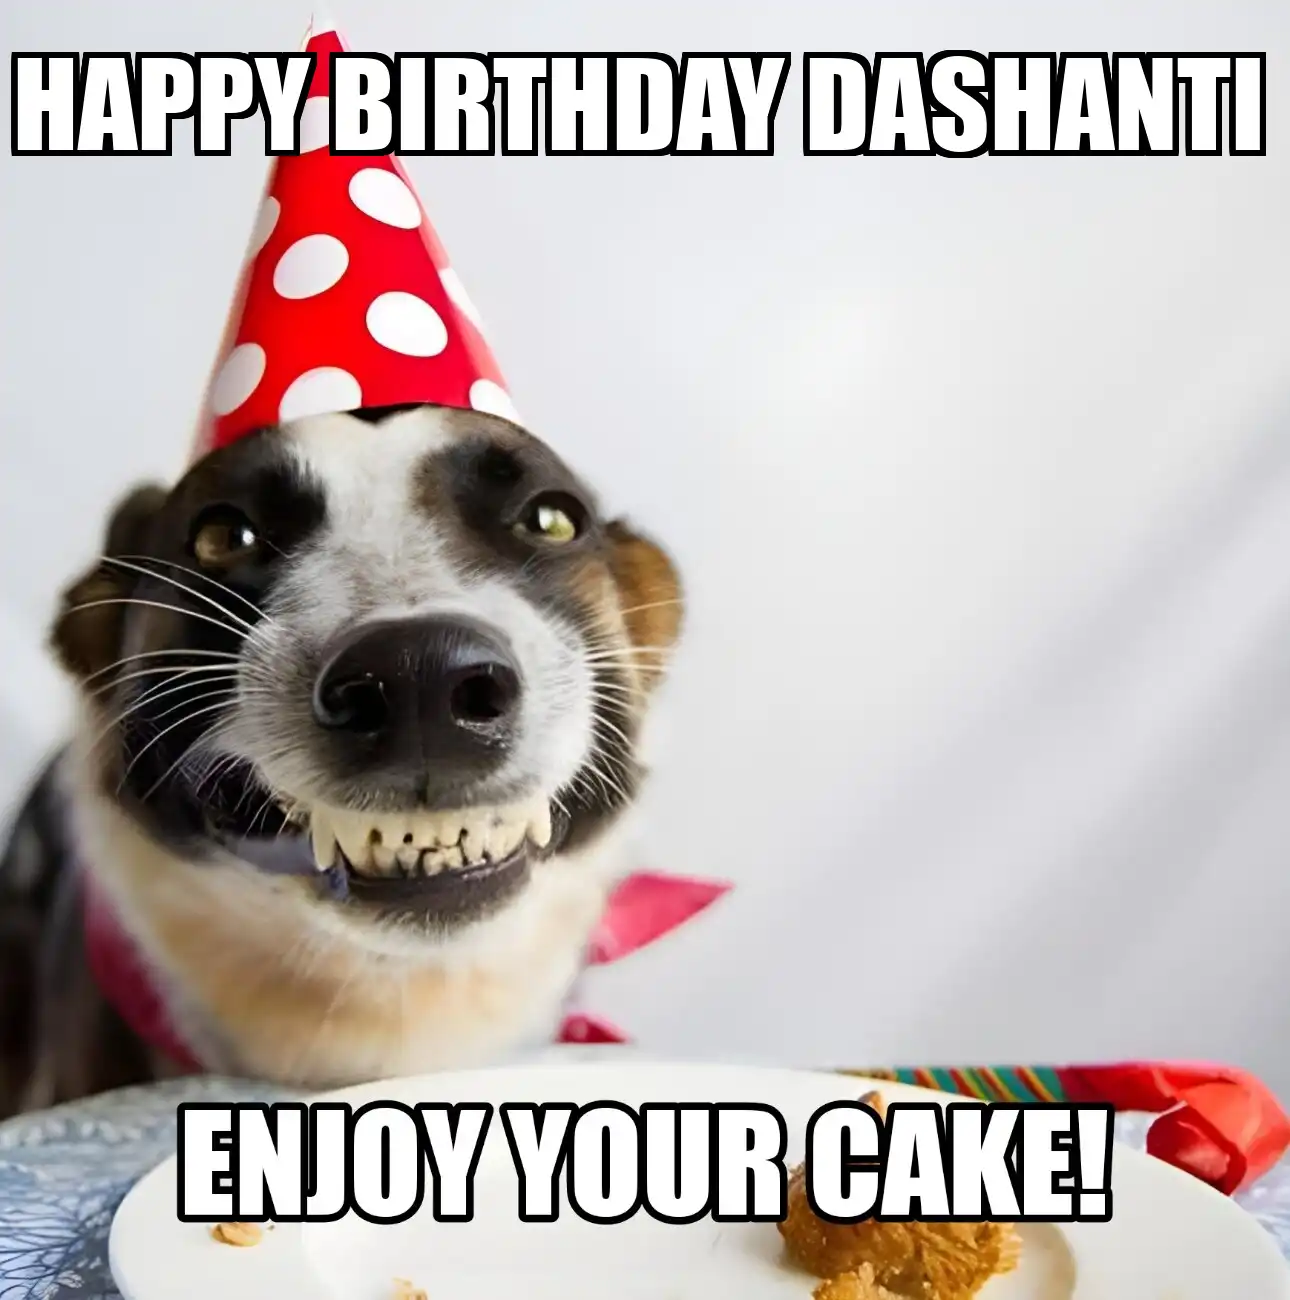 Happy Birthday Dashanti Enjoy Your Cake Dog Meme